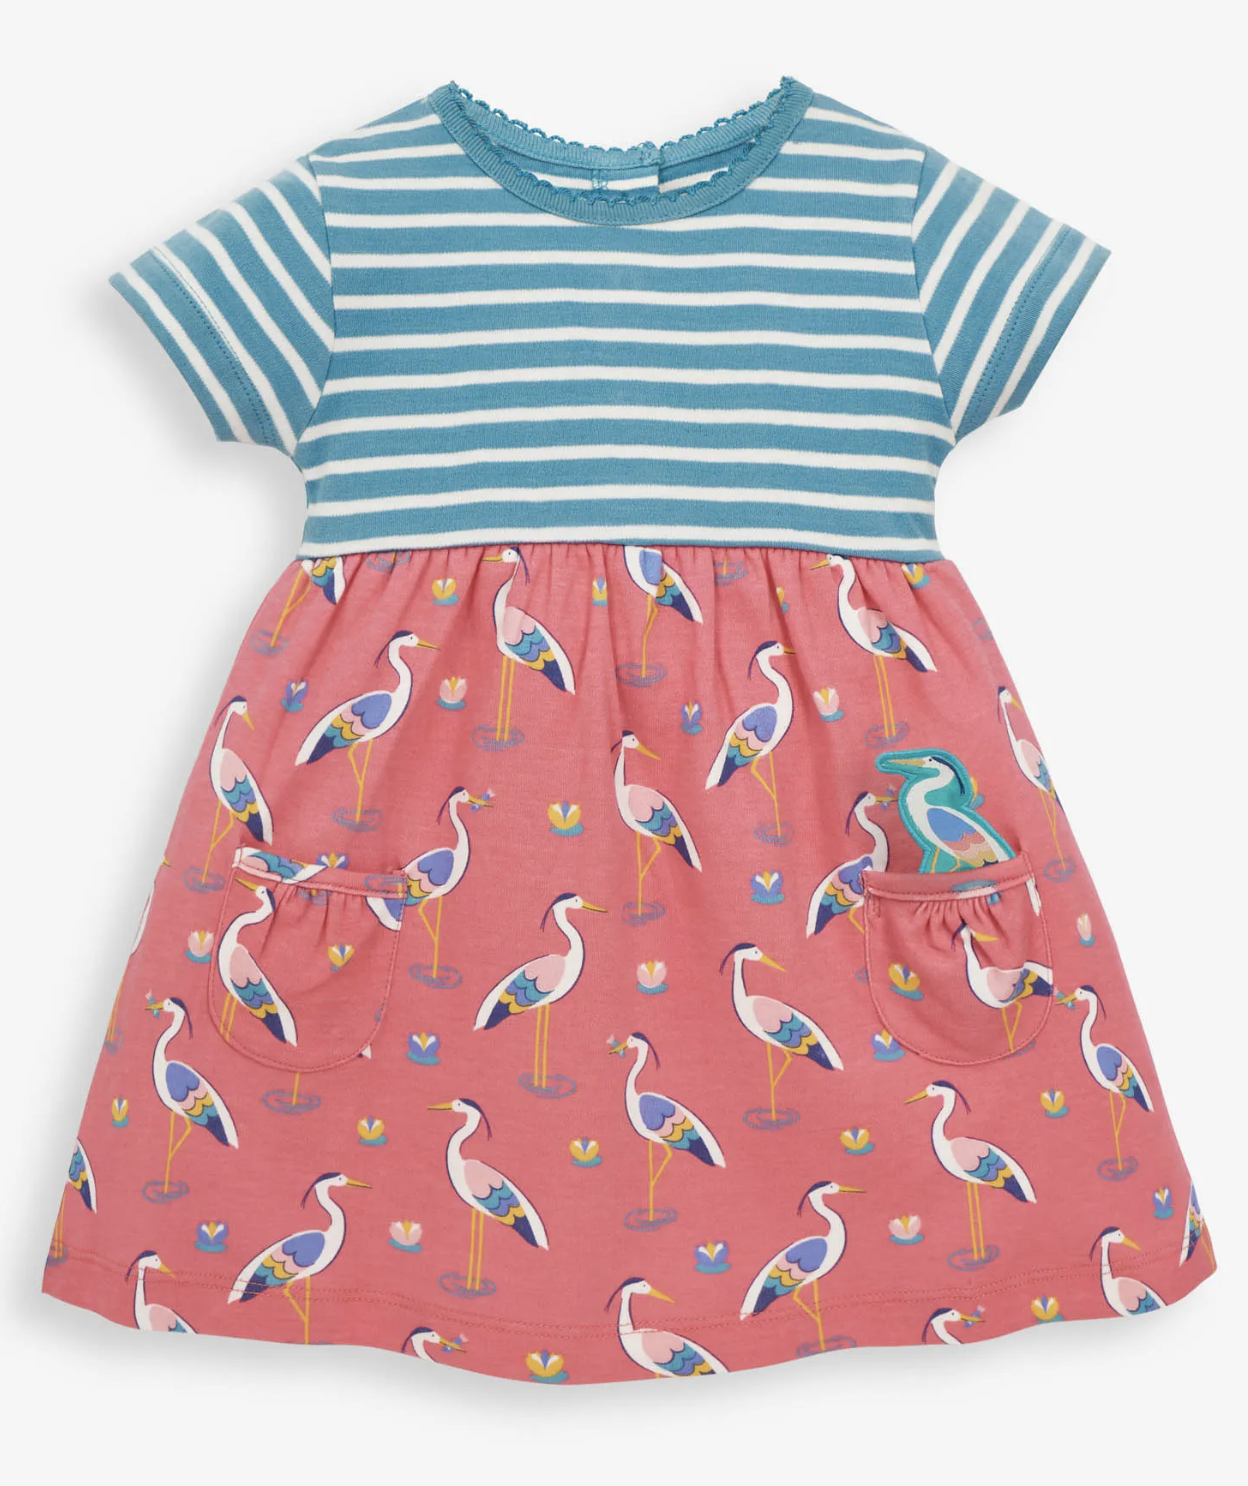 Stripe and Heron Print Dress 18-24 mos.